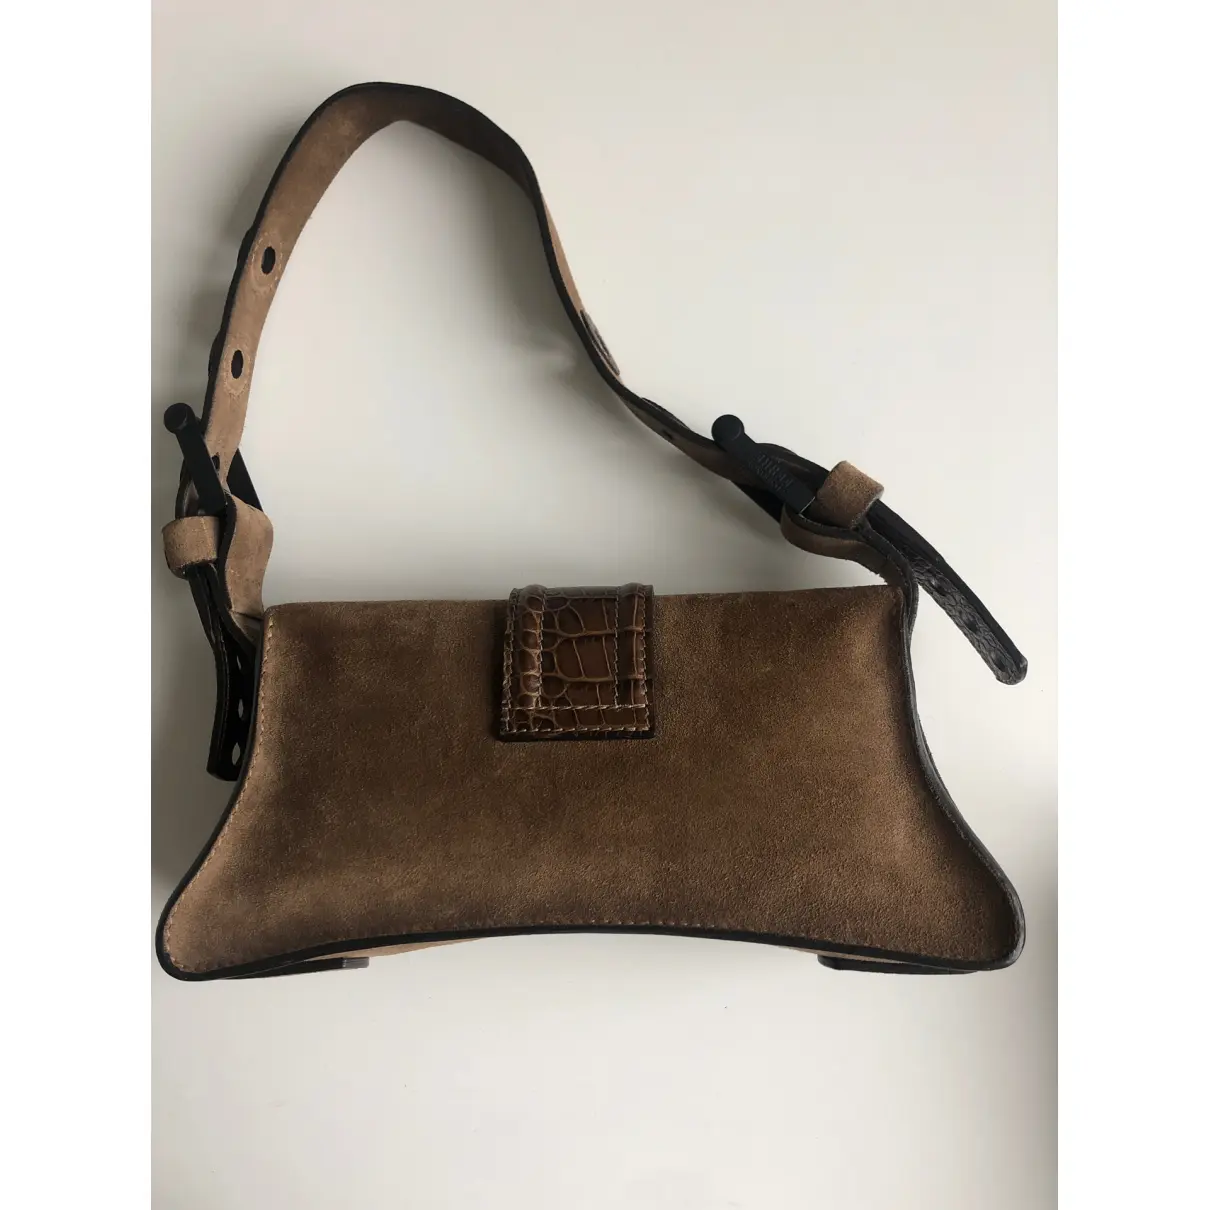 Buy Gianfranco Ferré Leather handbag online